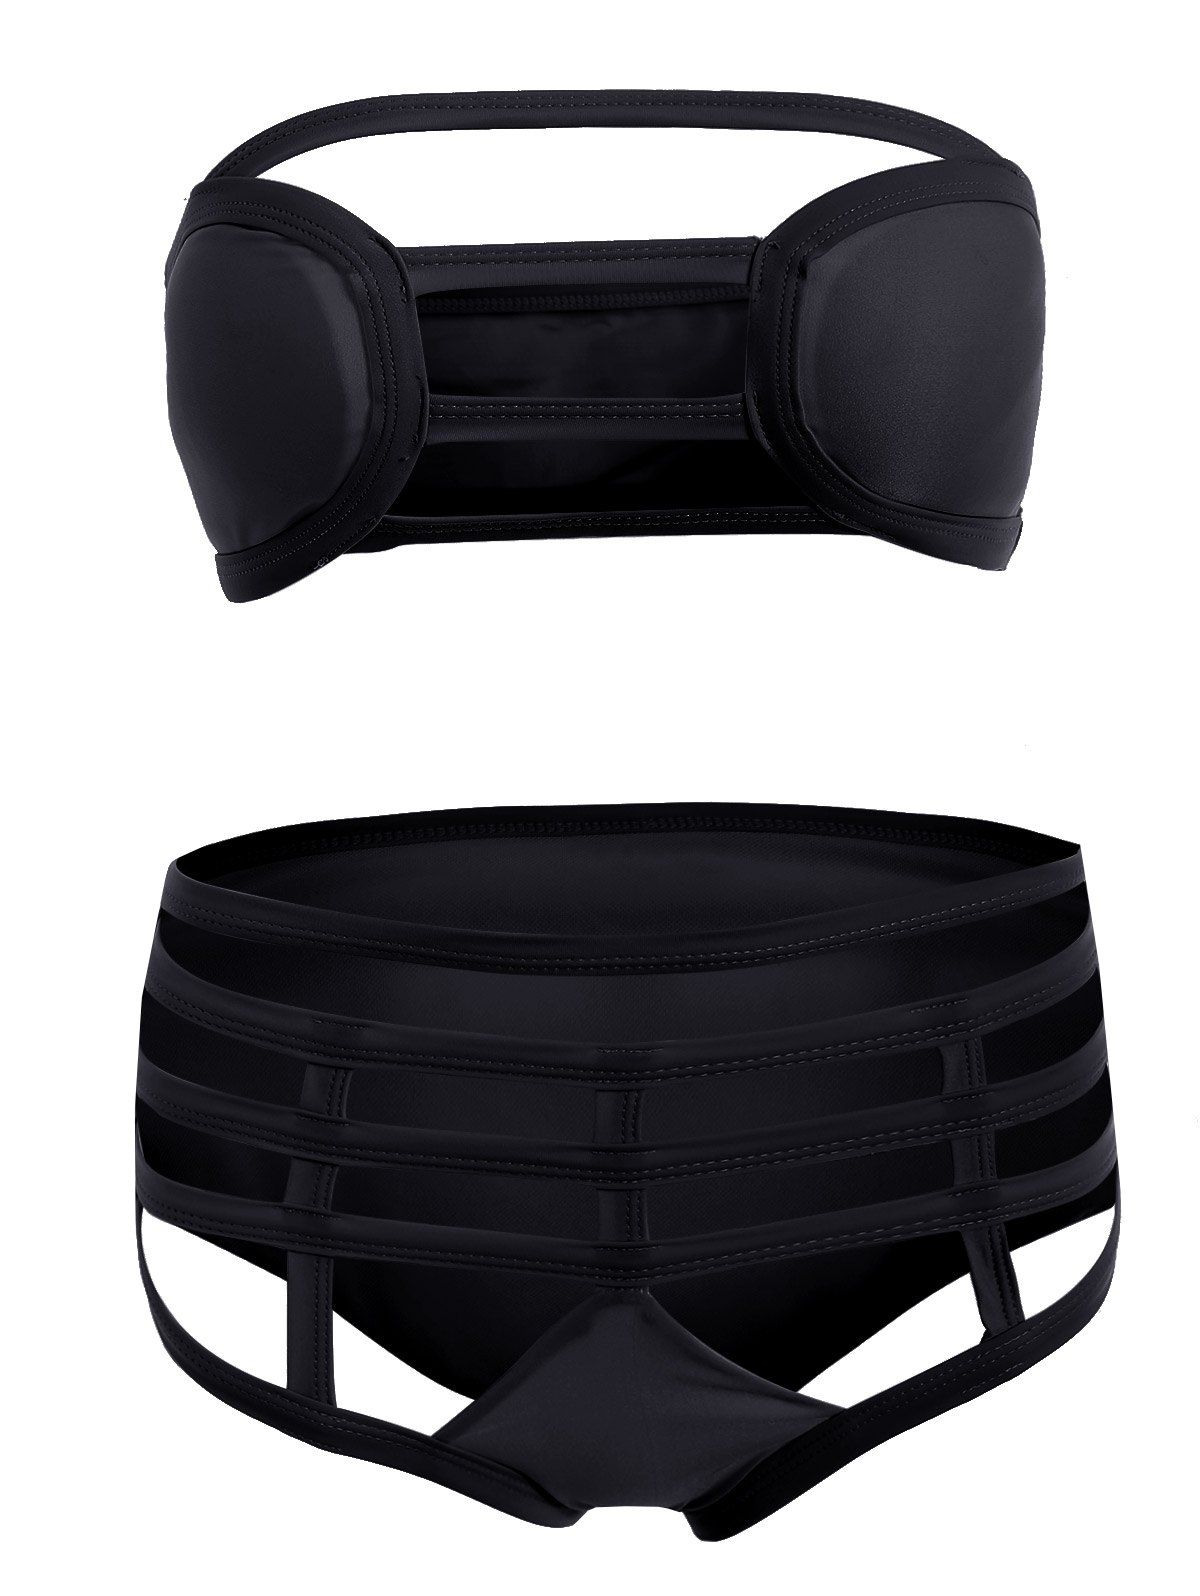 Cut Out Strapless Bathing Suit Bikini Set - BLACK S